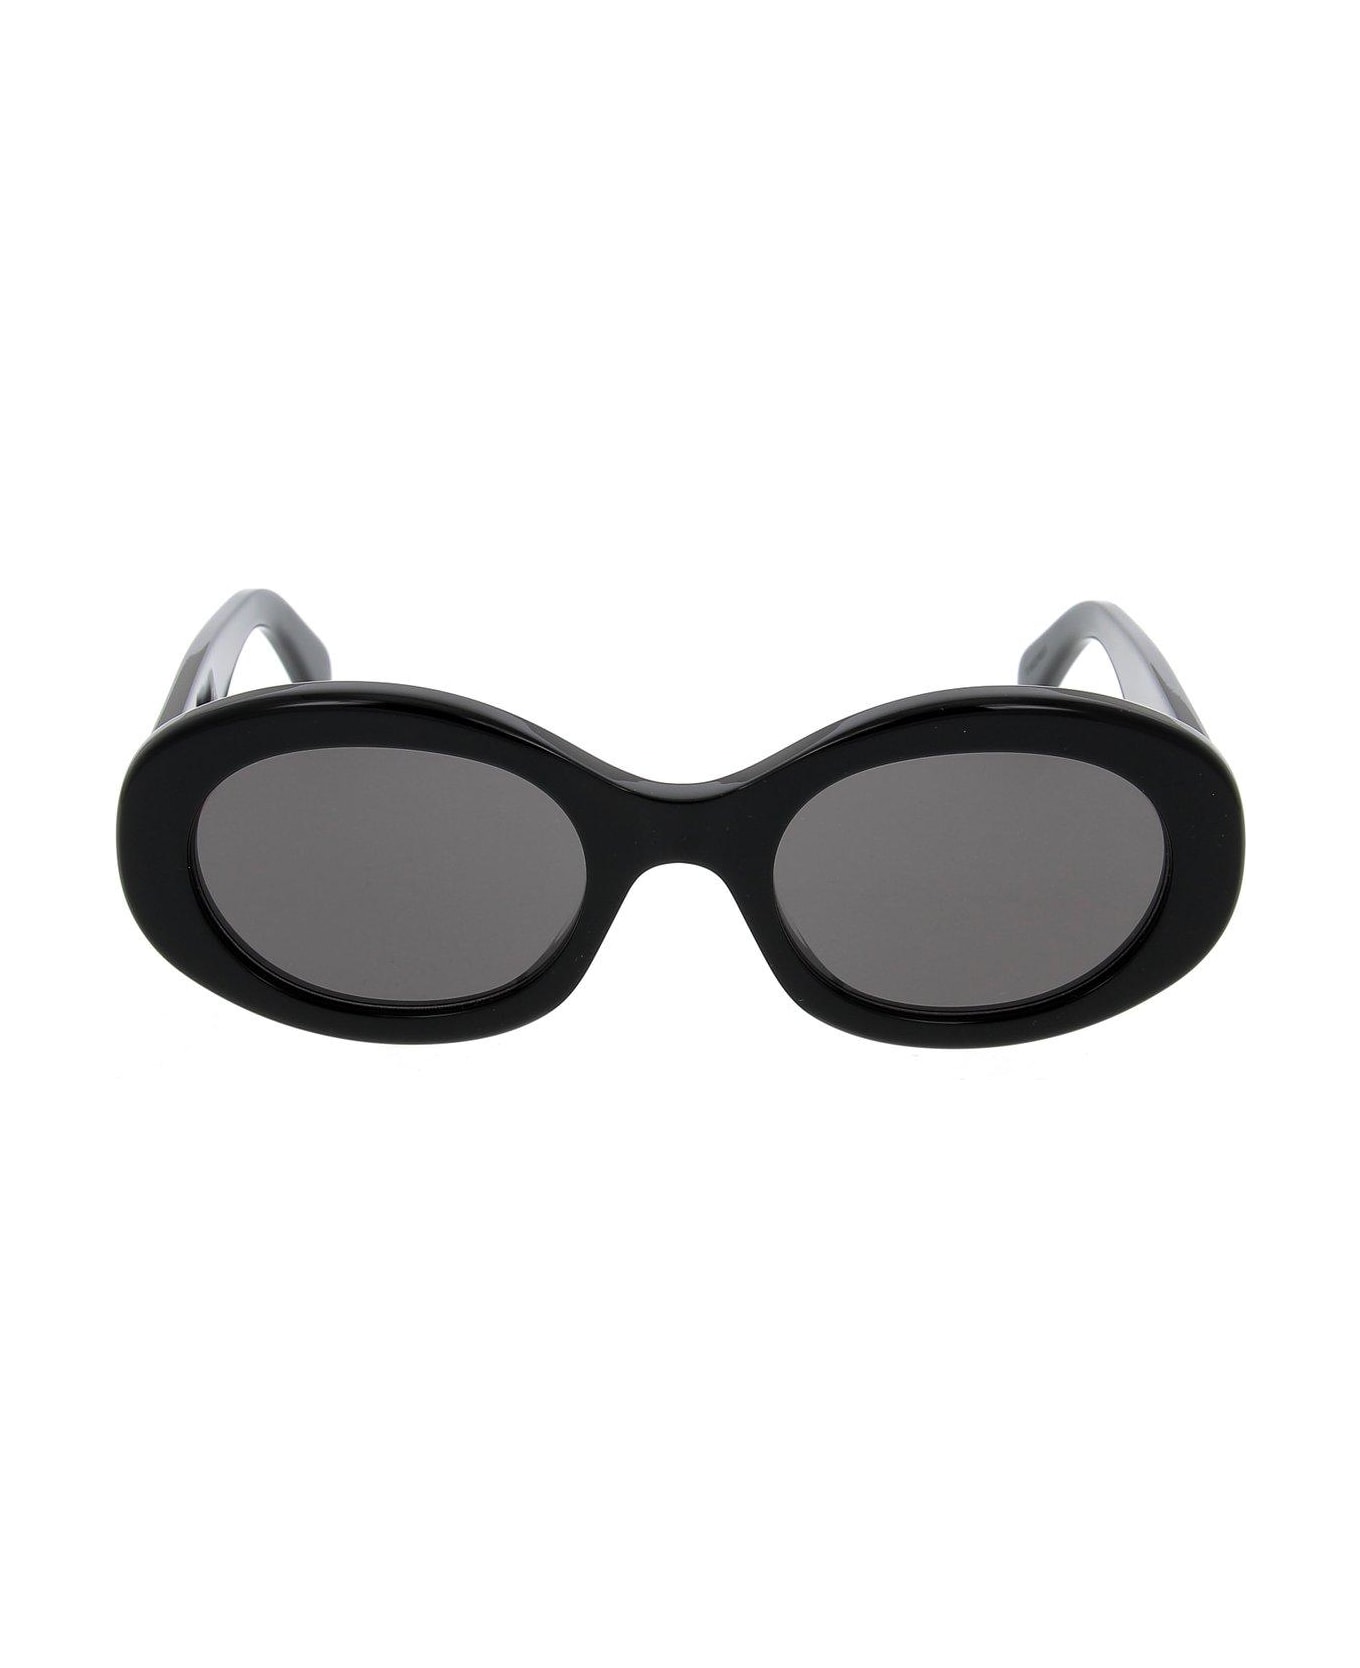 Celine Oval Frame Sunglasses - 01a